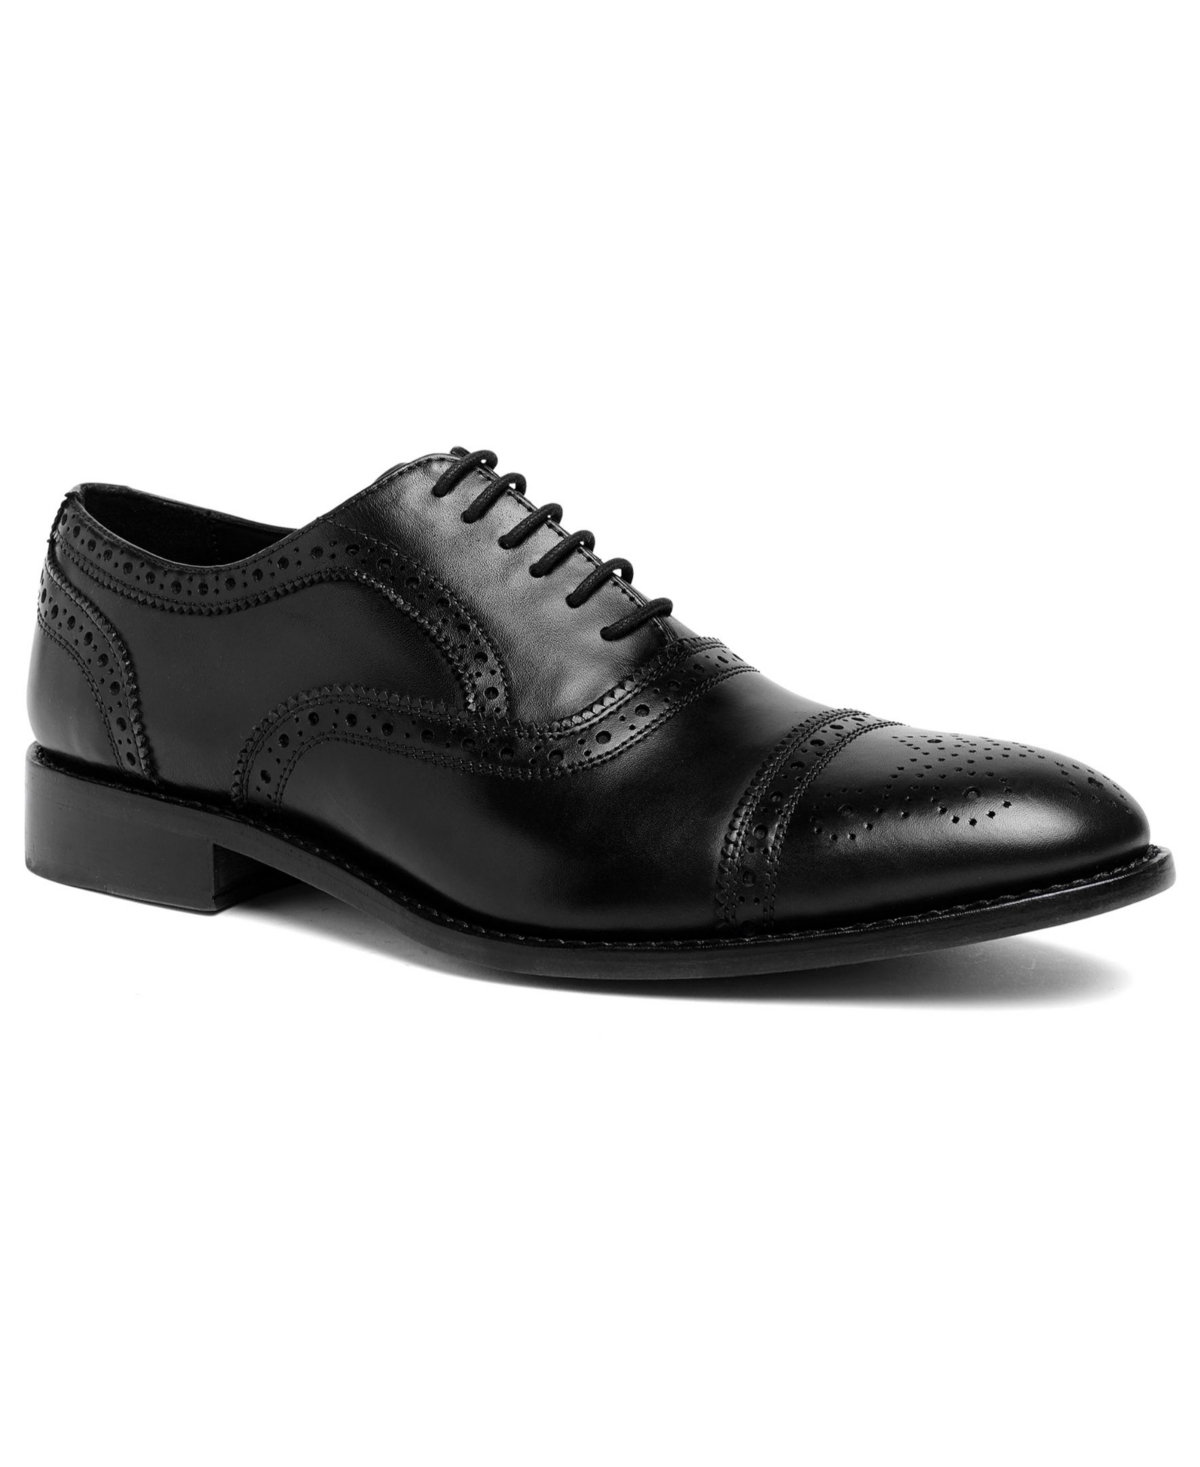 Men's Ford Quarter Brogue Oxford Leather Sole Lace-Up Dress Shoe - Black